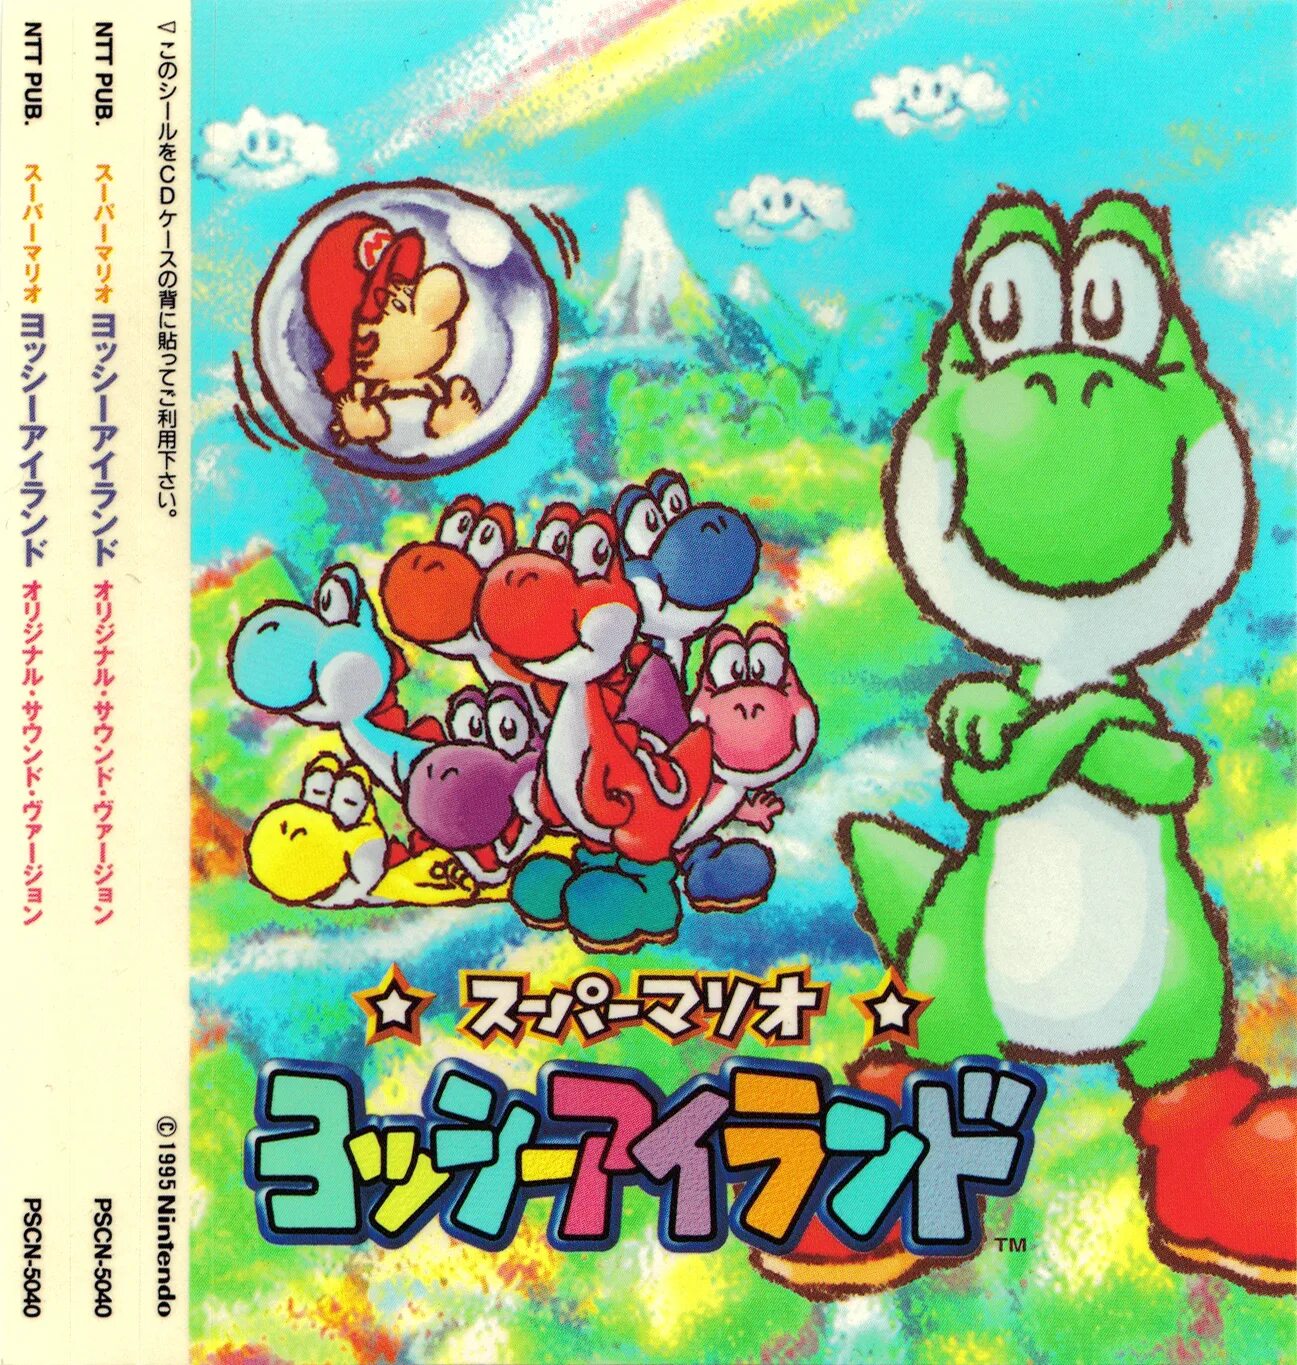 Island mp3. Yoshi's Island Ноты. Super Mario World 2: Yoshi's Island Music. Yoshi s Island CD. Yoshi 8016.